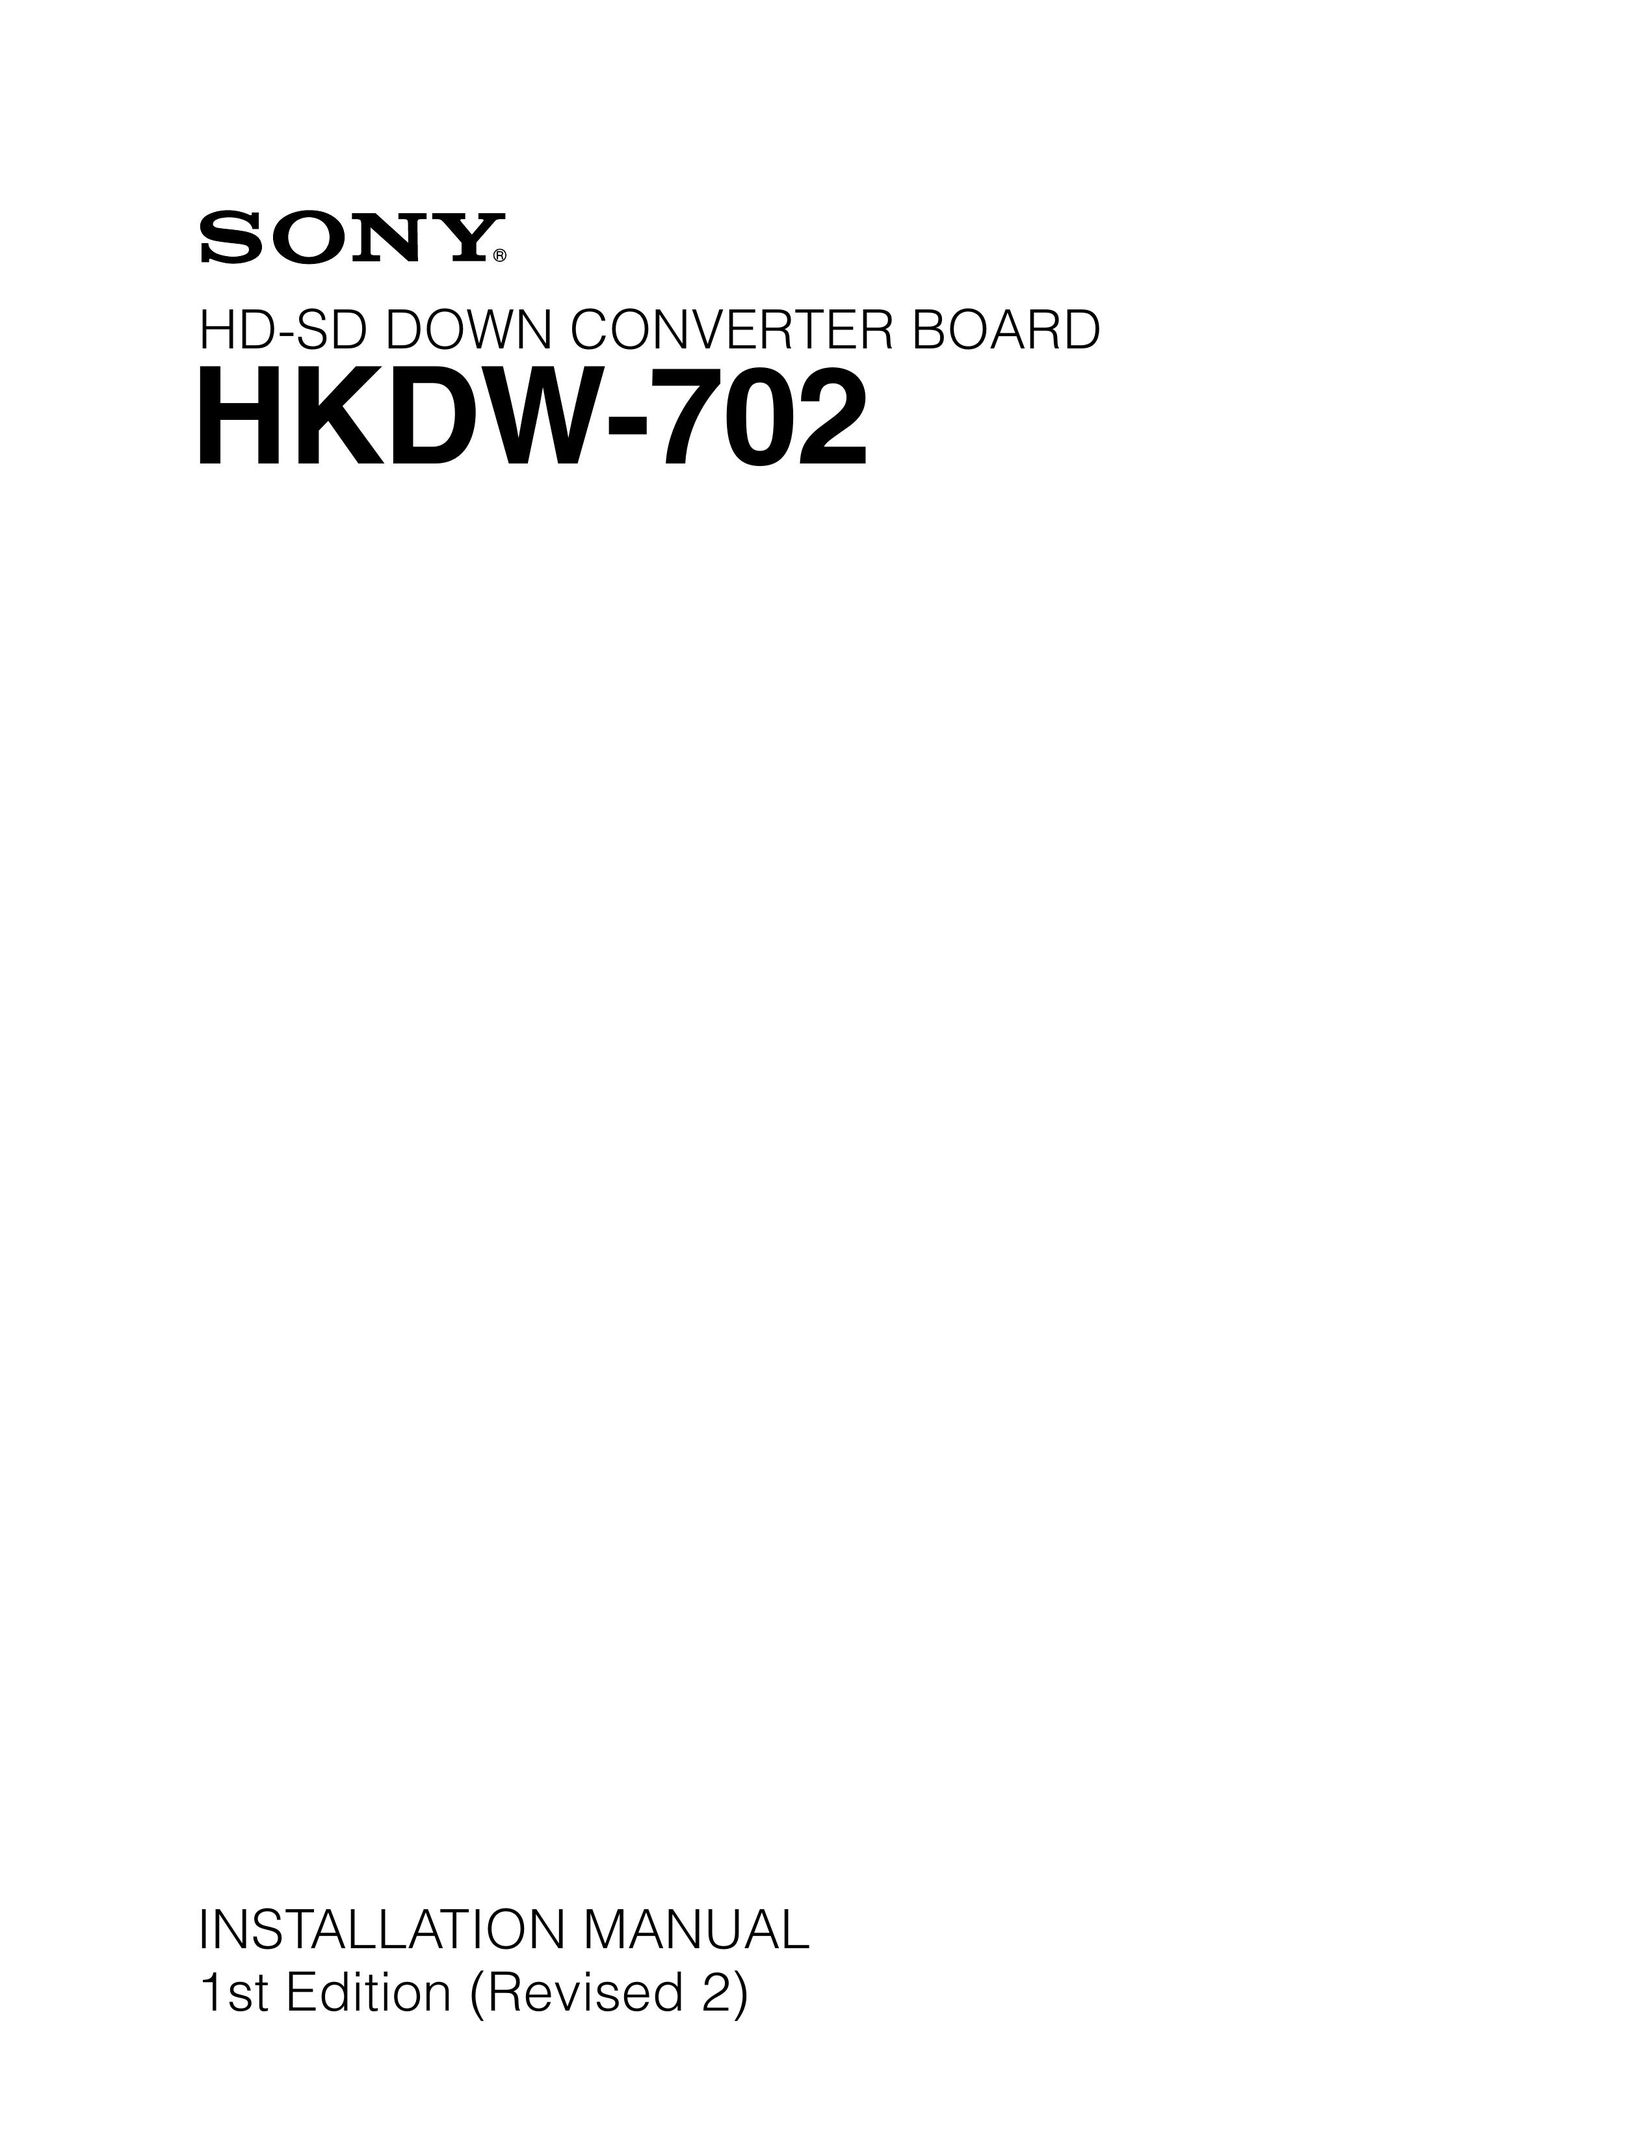 Addlogix HKDW-702 TV Converter Box User Manual